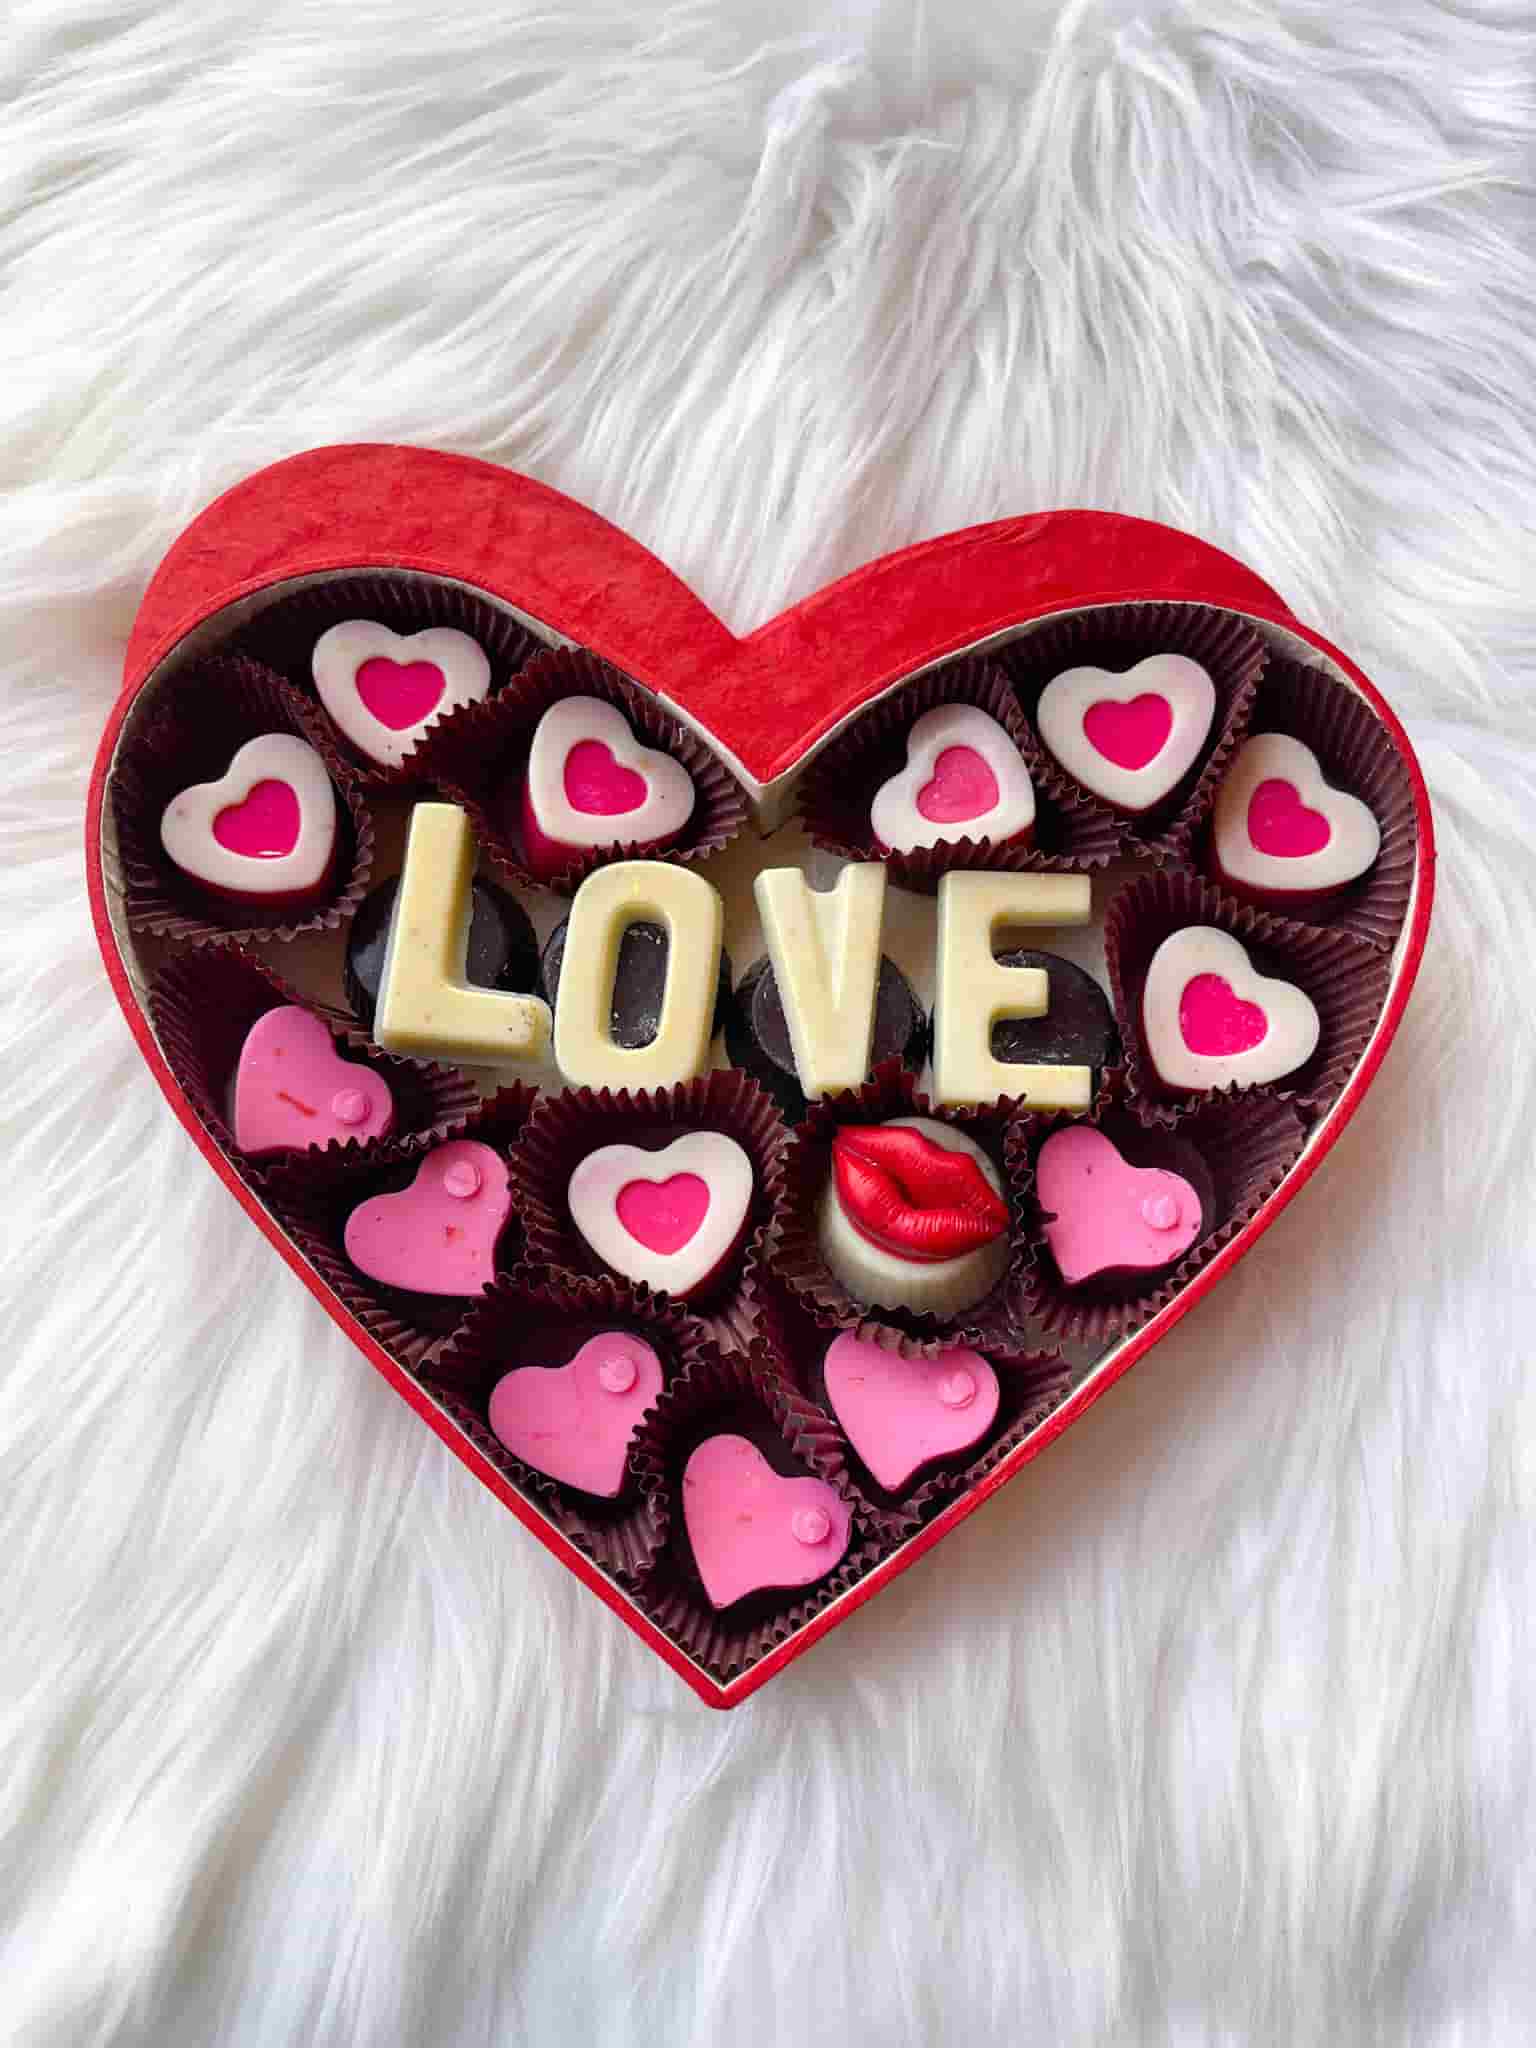 Love Heart Shaped Chocolate Box